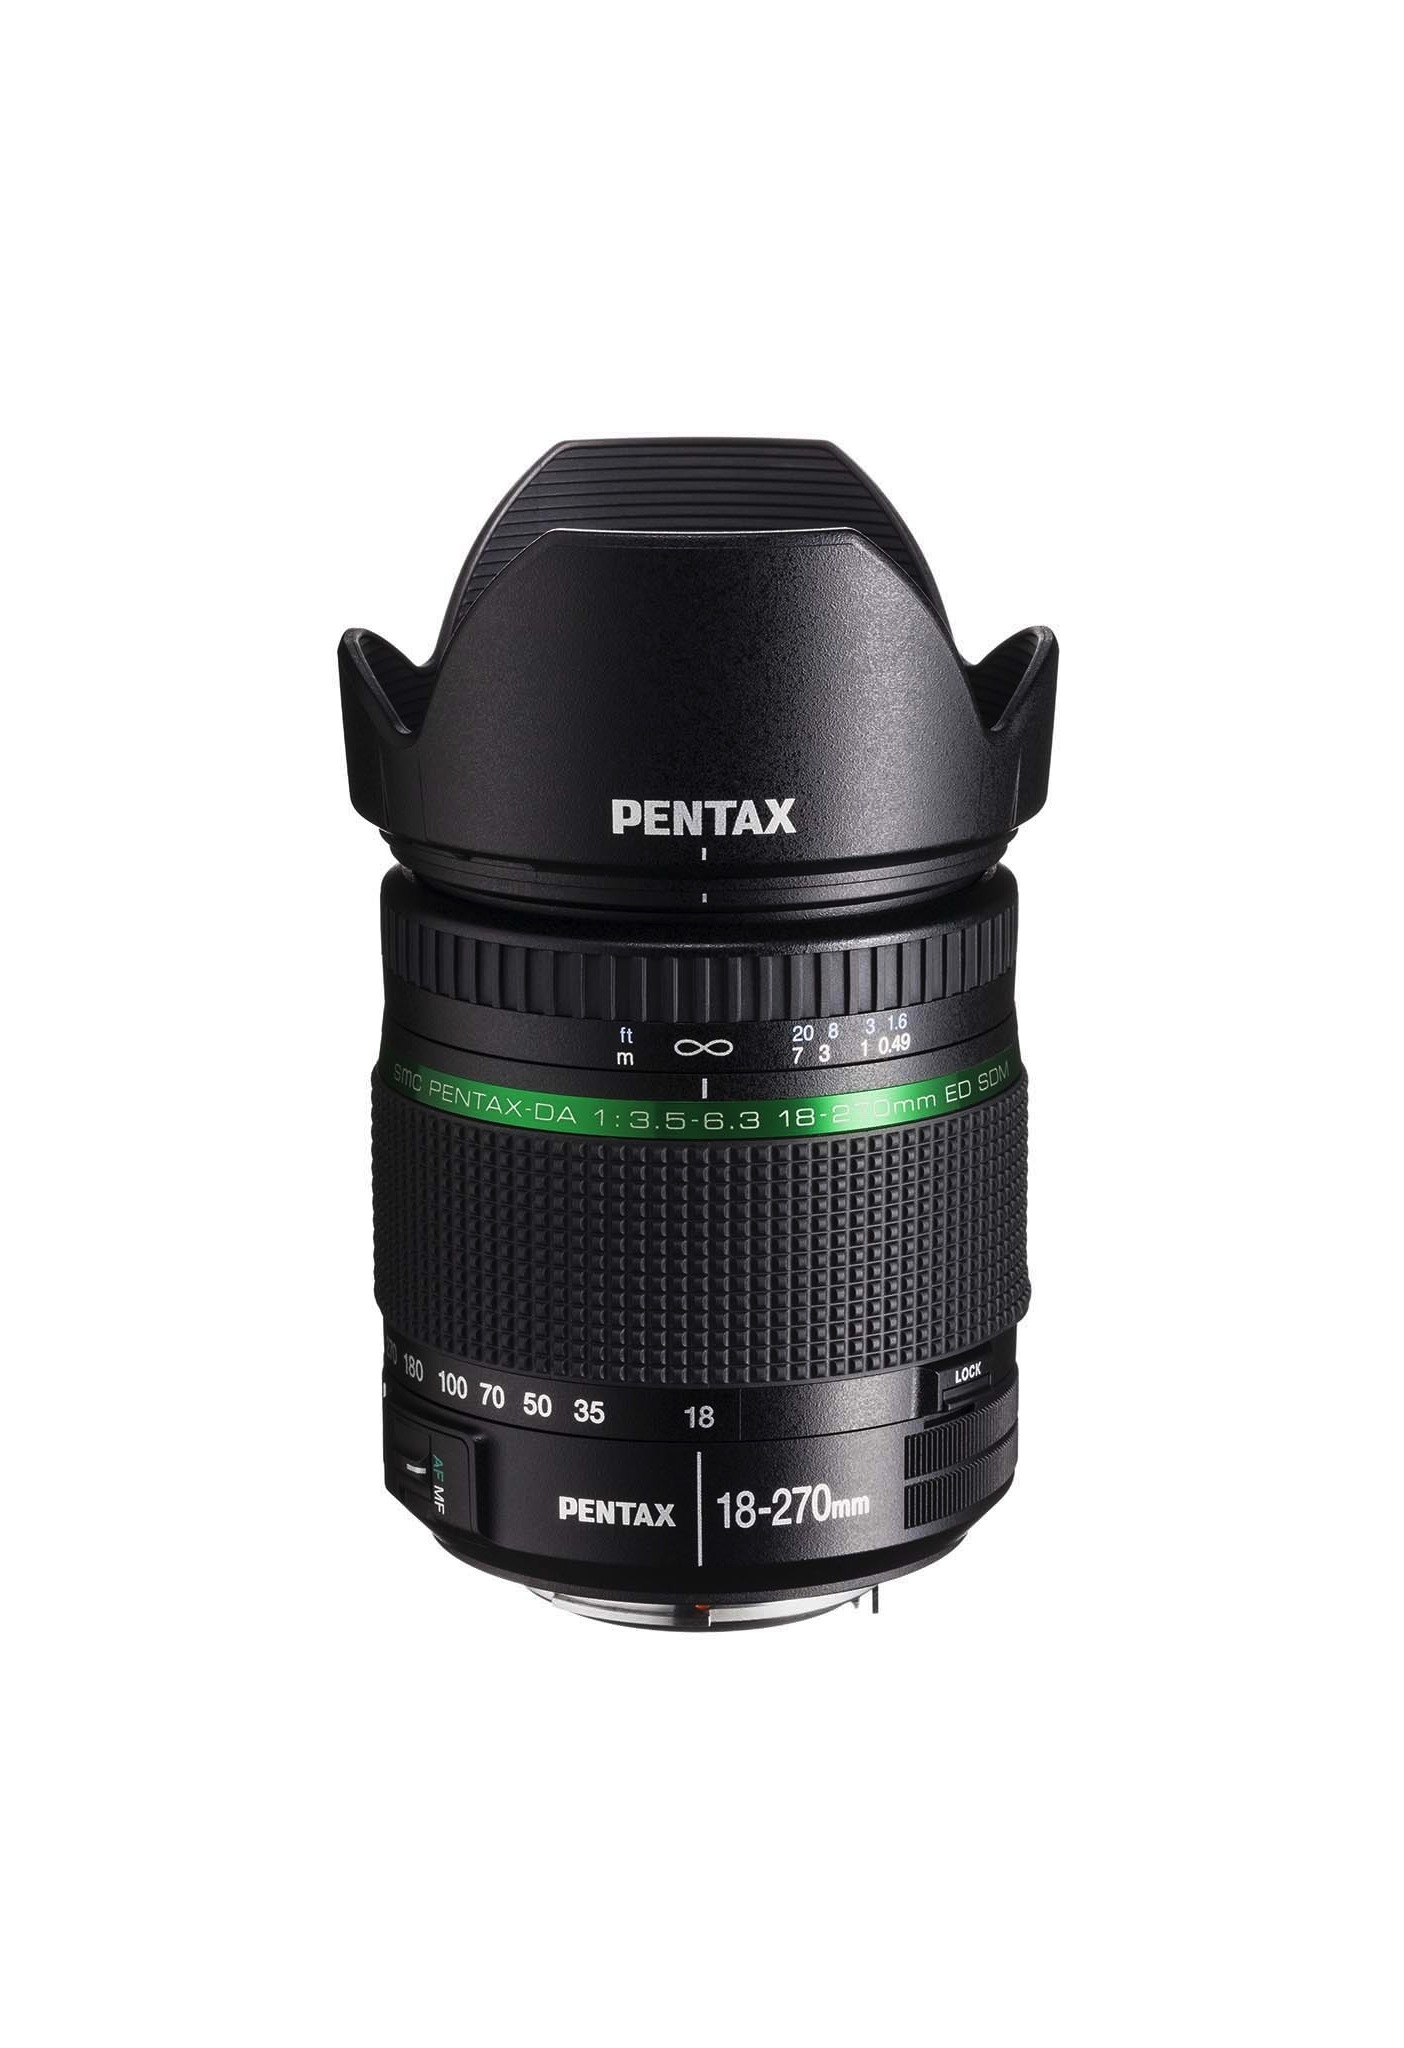 smc PENTAX-DA 18-270mm F3.5-6.3 ED SDM A high-magnification zoom